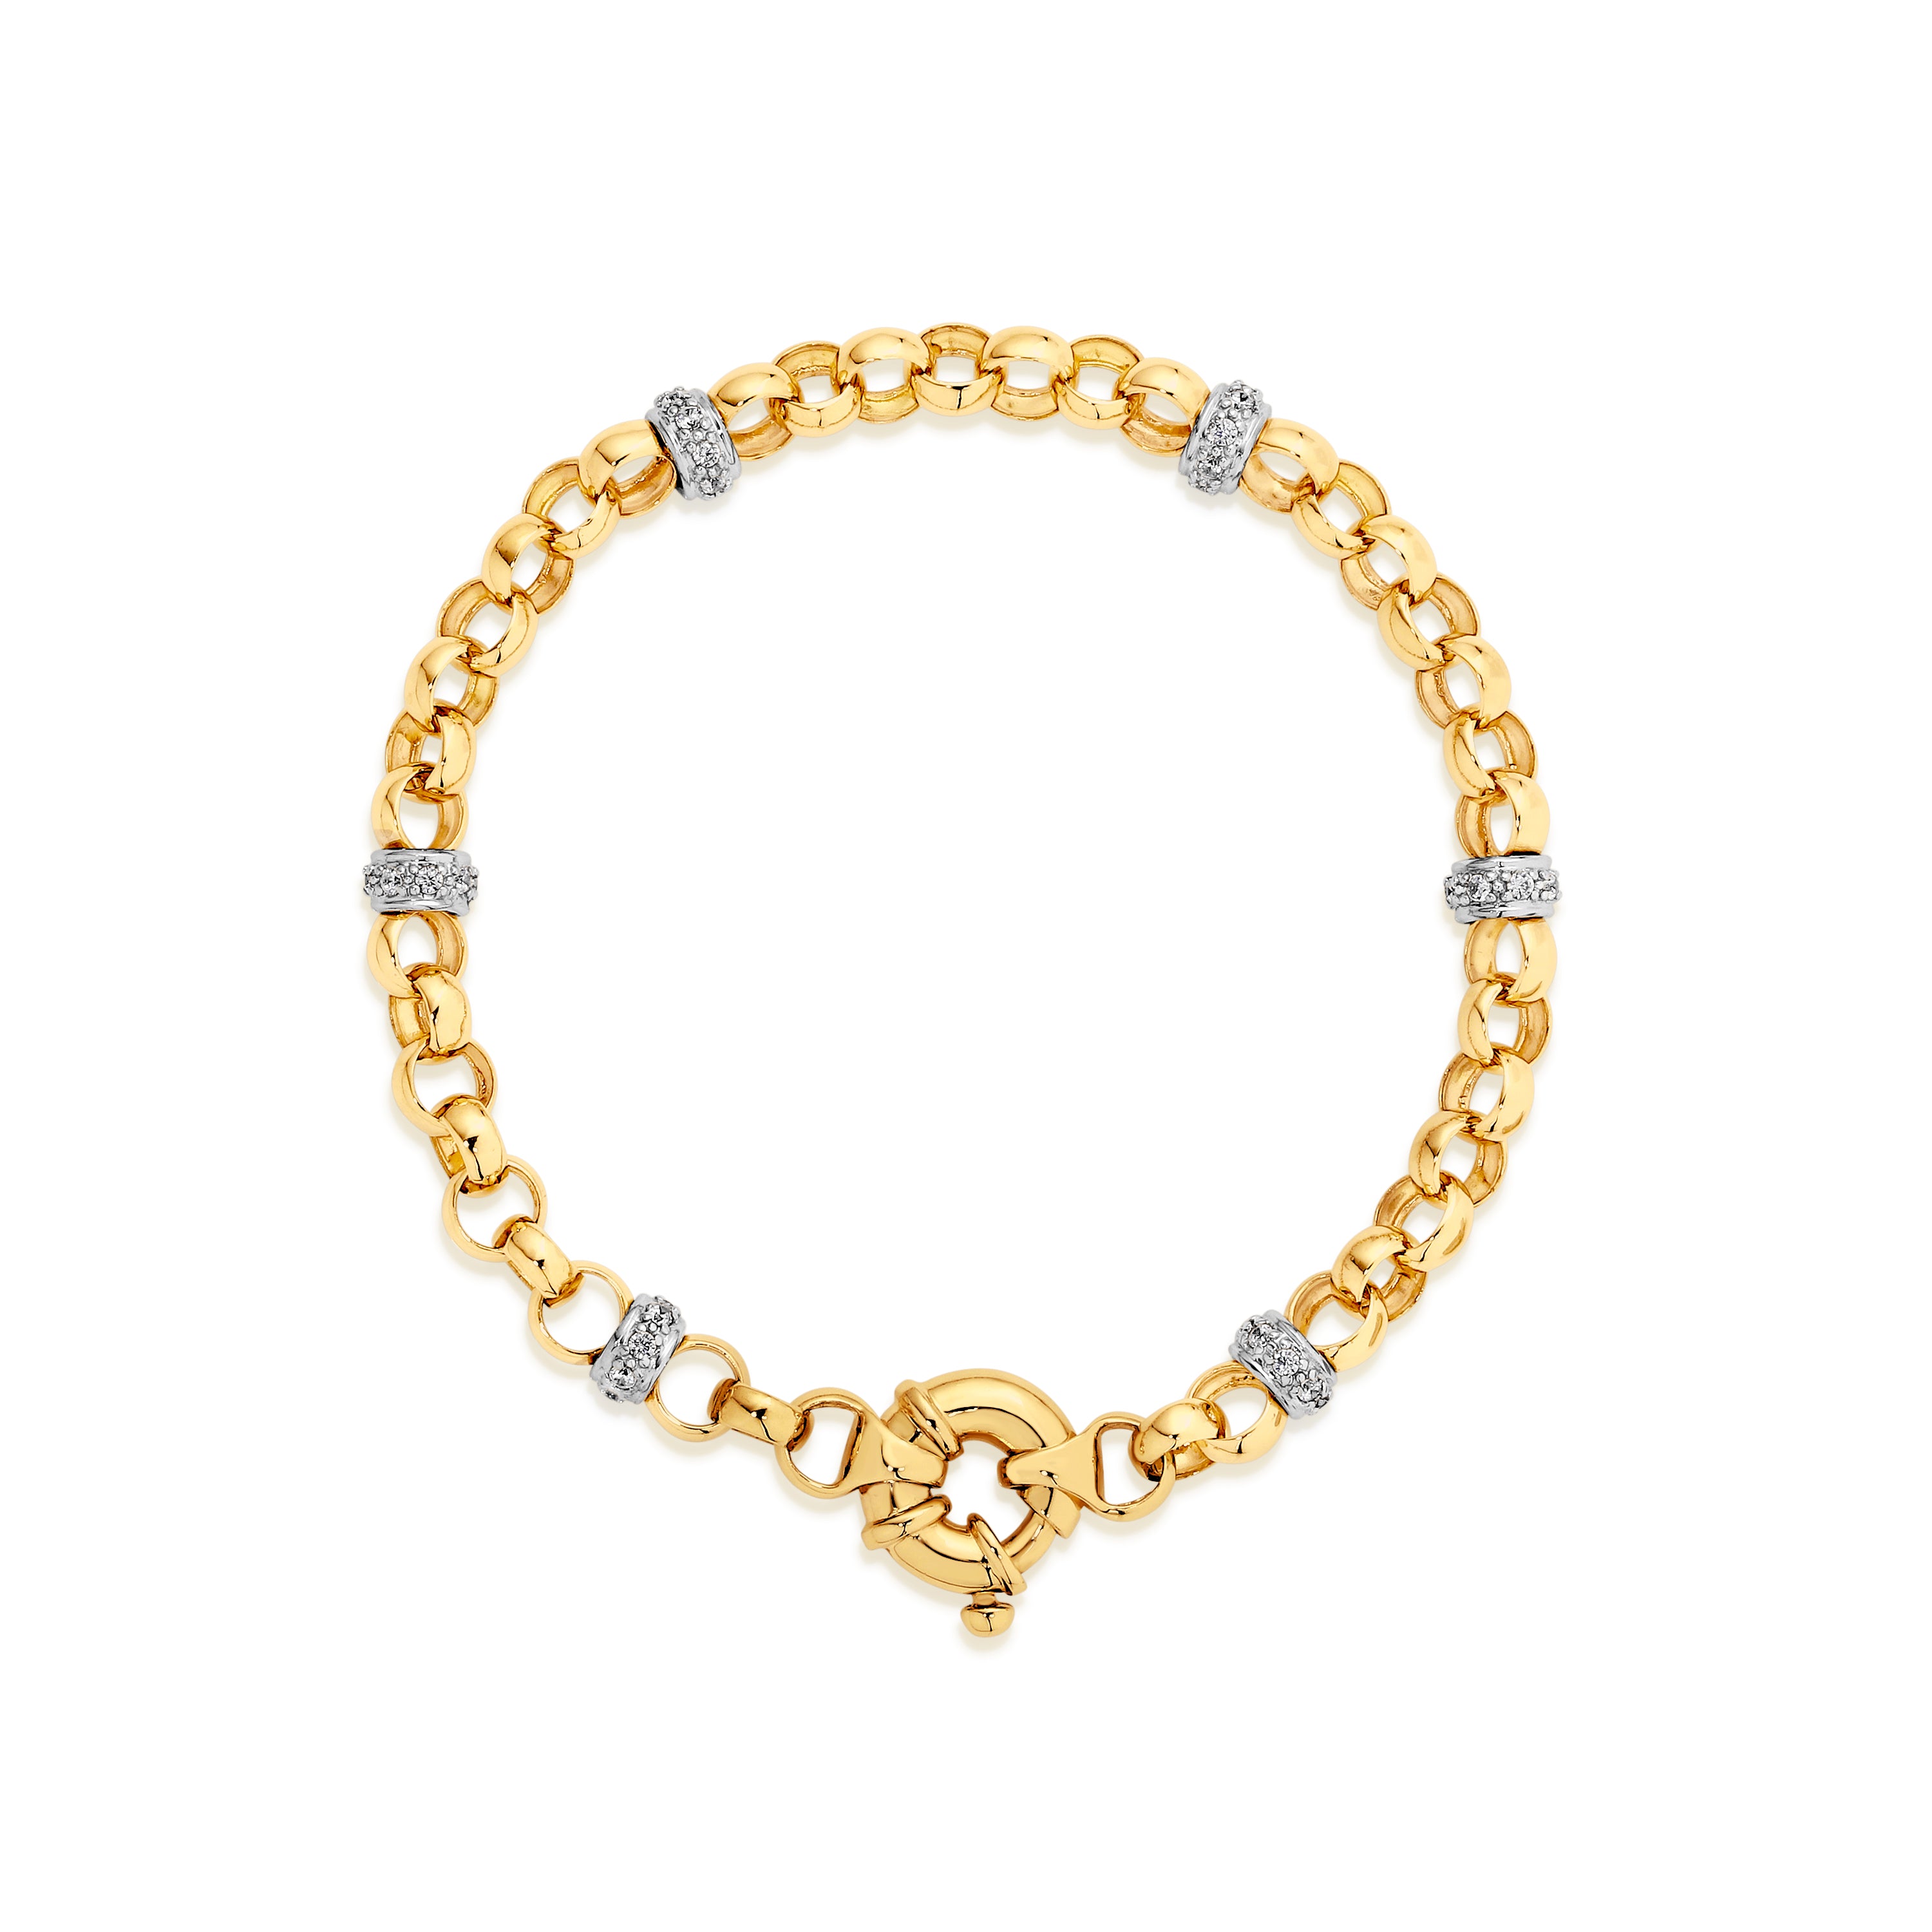 9ct gold solid stone set bracelet